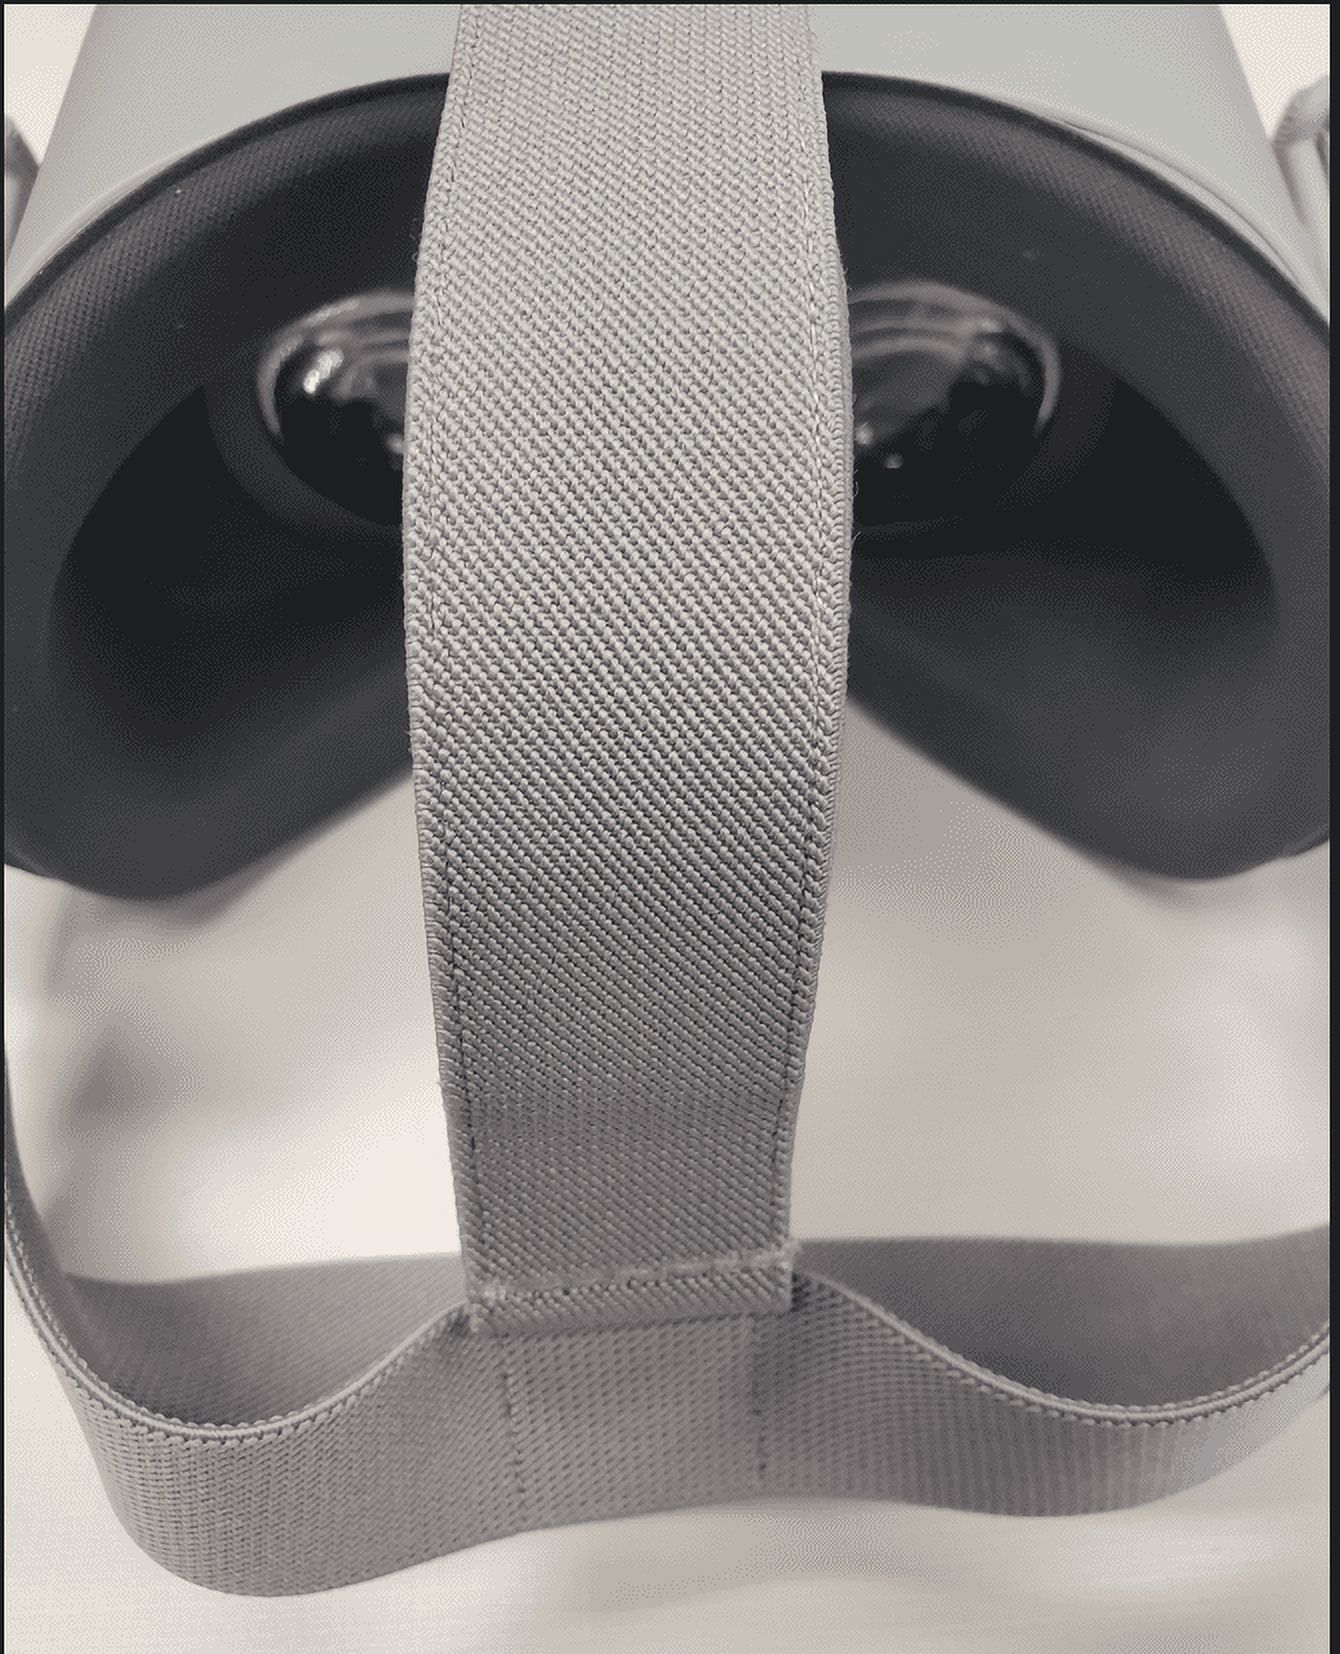 Restored Oculus Go Standalone Virtual Reality Headset 32GB Gray Bluetooth (Refurbished) - image 4 of 4